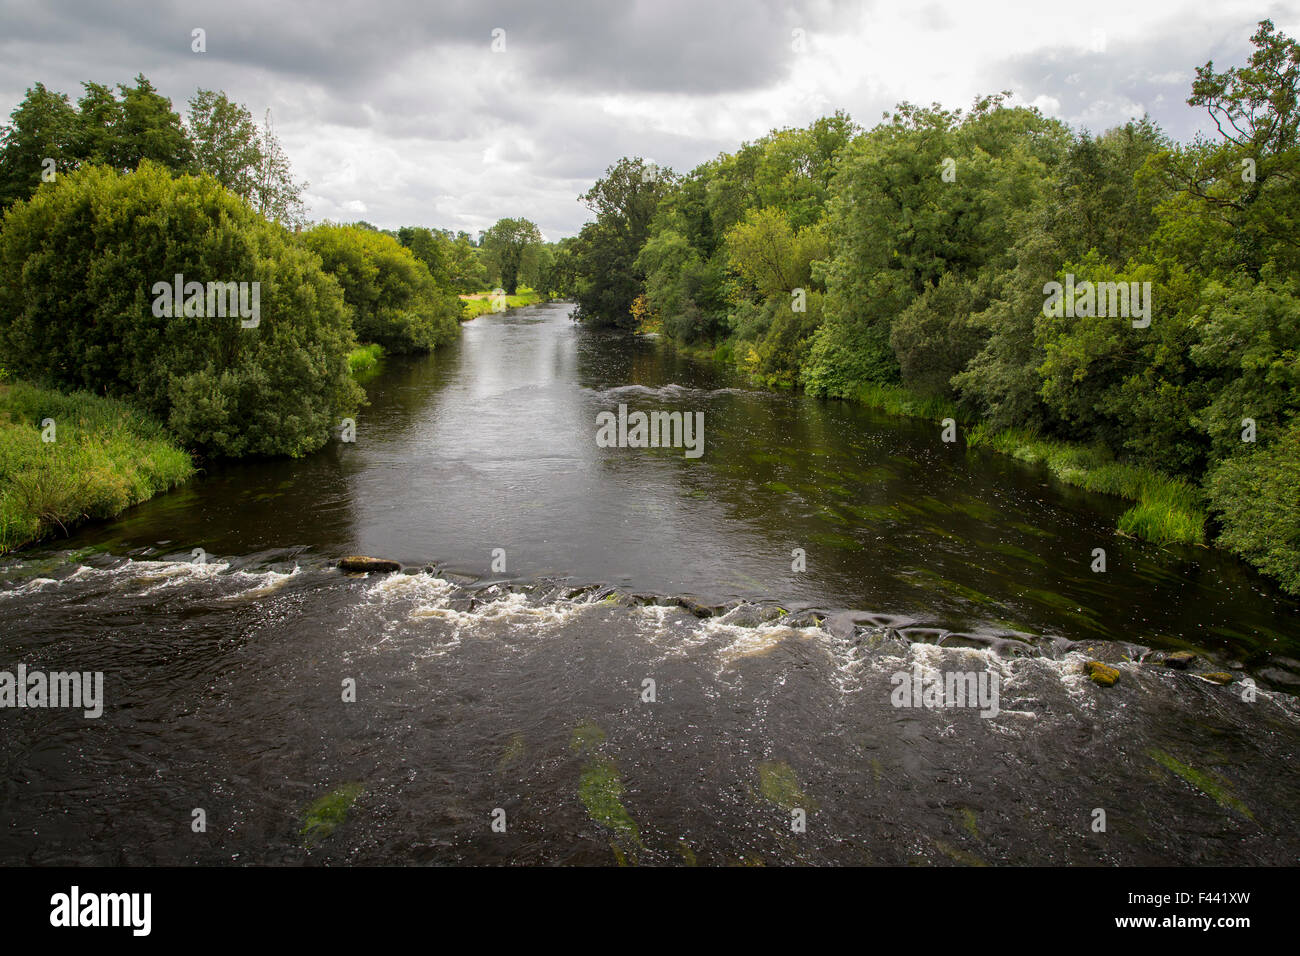 River Erne flowing through town of Belturbet, County Cavan, Republic of Ireland Stock Photo